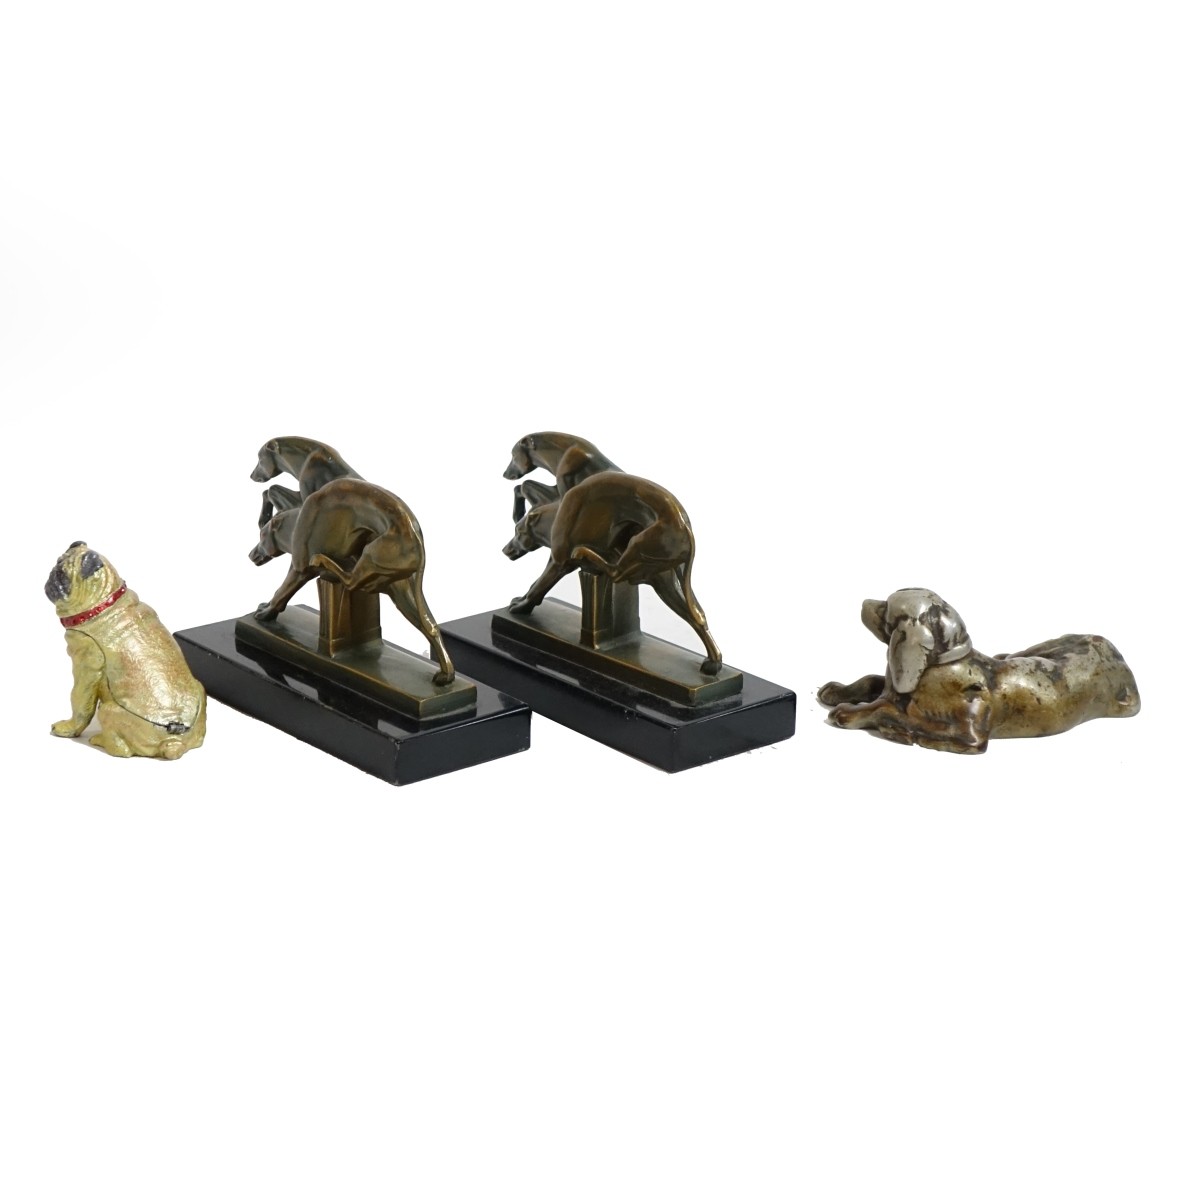 Four (4) Dog Figural Sculptures